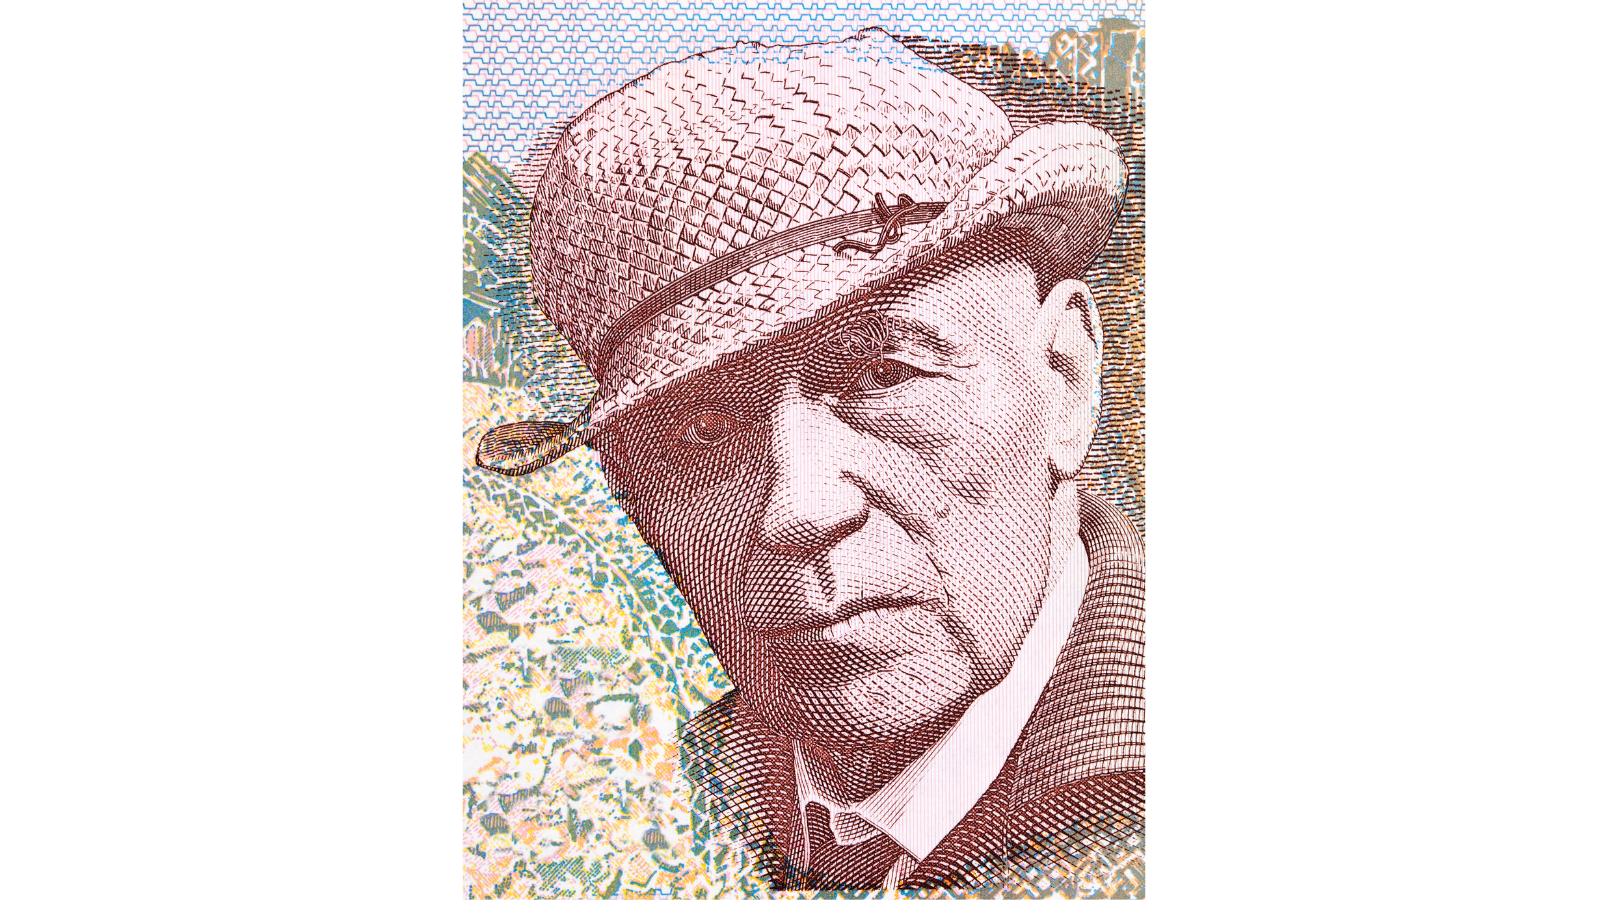 Image of Icelandic artist Jóhannes Sveinsson Kjarval from 2.000 Krona banknote.